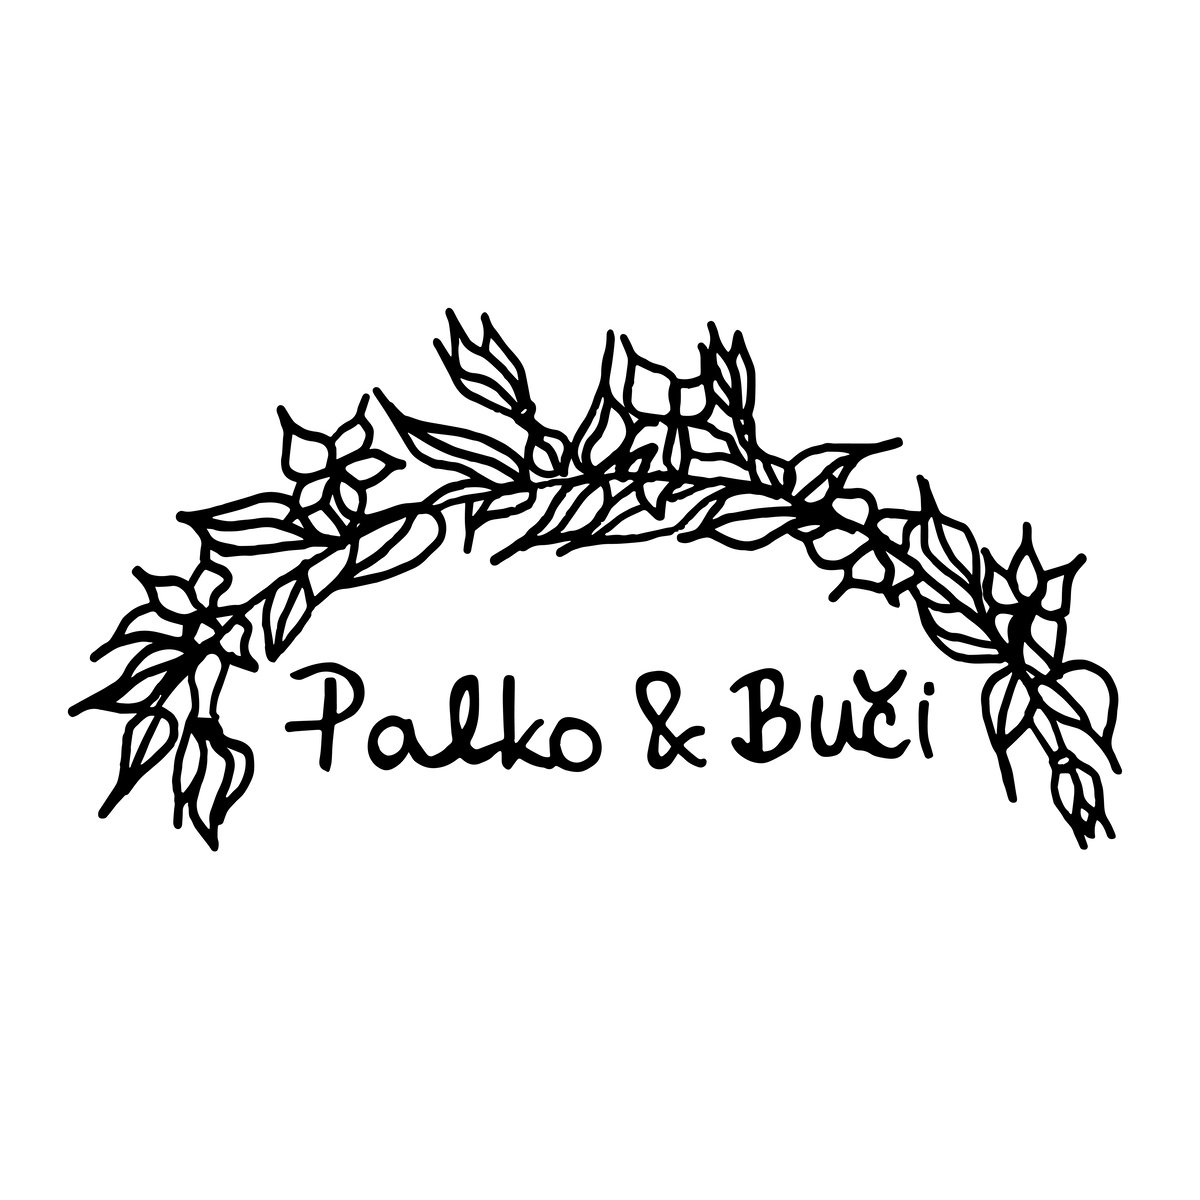 Palko & Buci